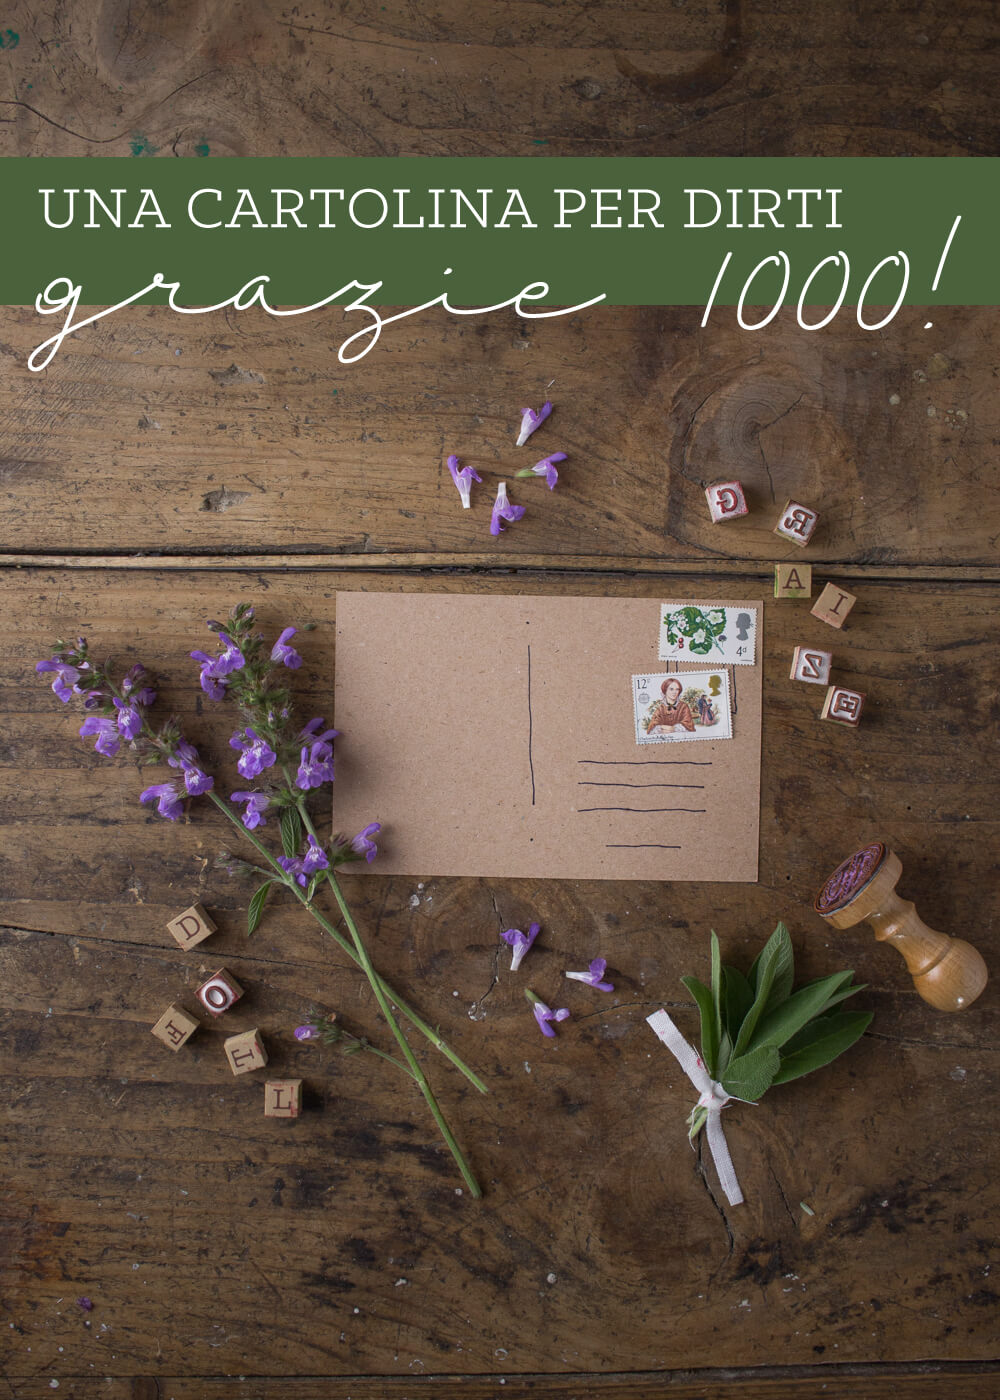 Una cartolina per dirti grazie 1000 - Lily&Sage Design